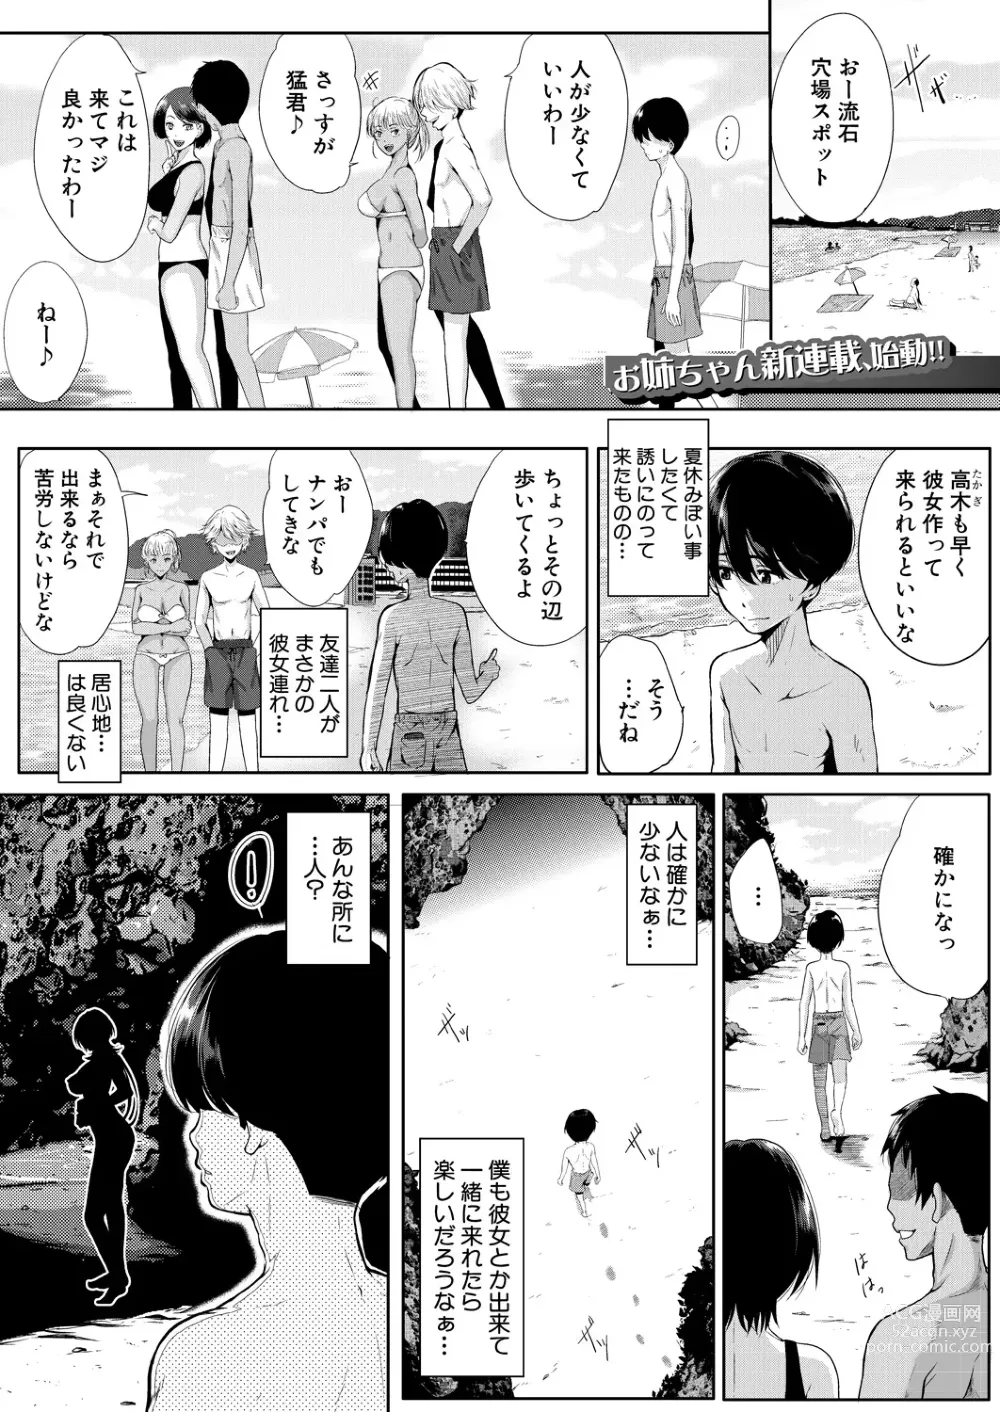 Page 1 of manga Strawberry Mermaid Ch.1-2